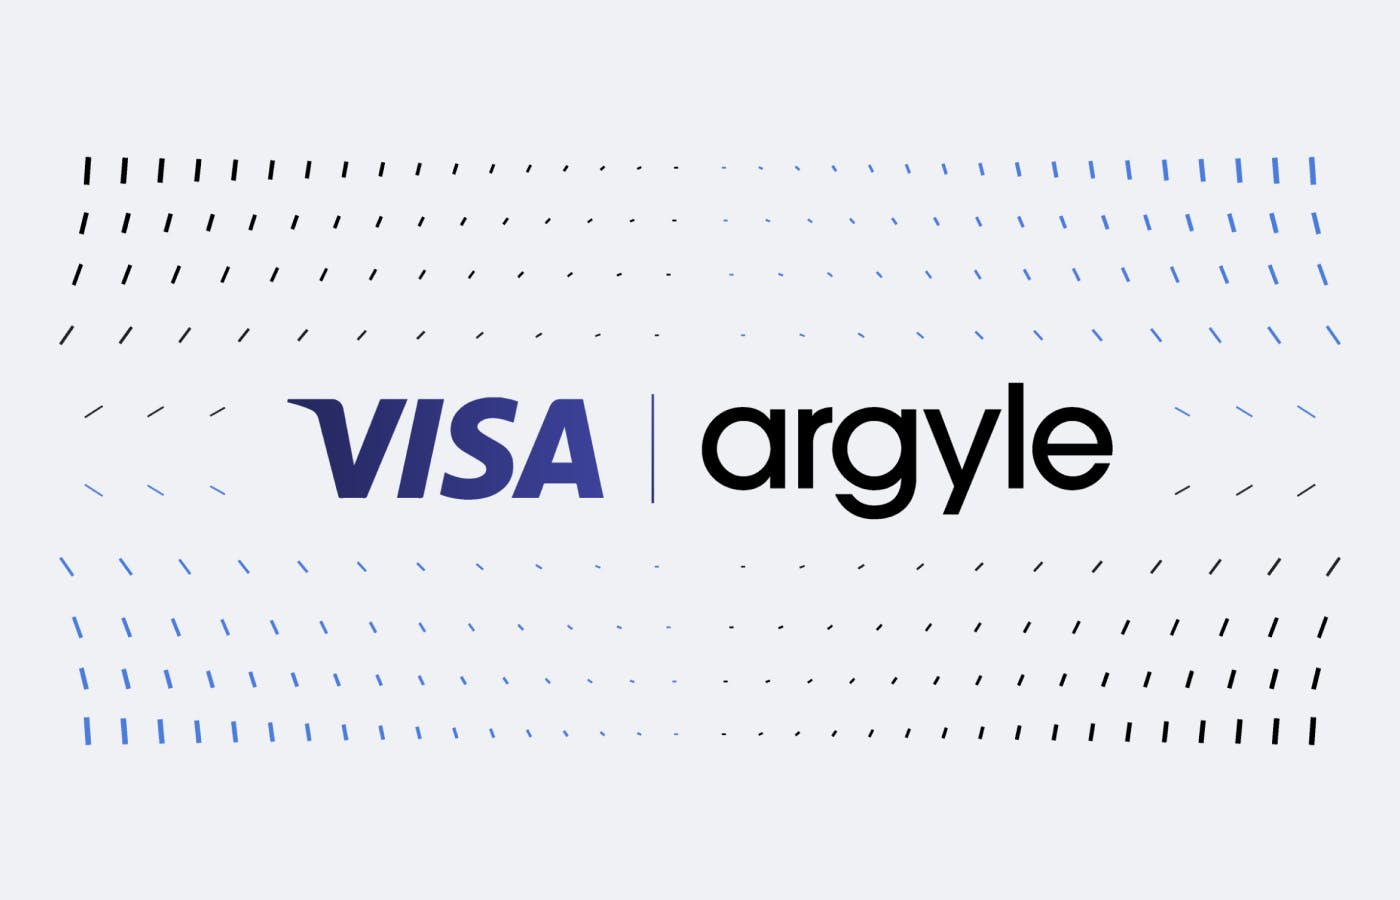 Visa and Argyle logos